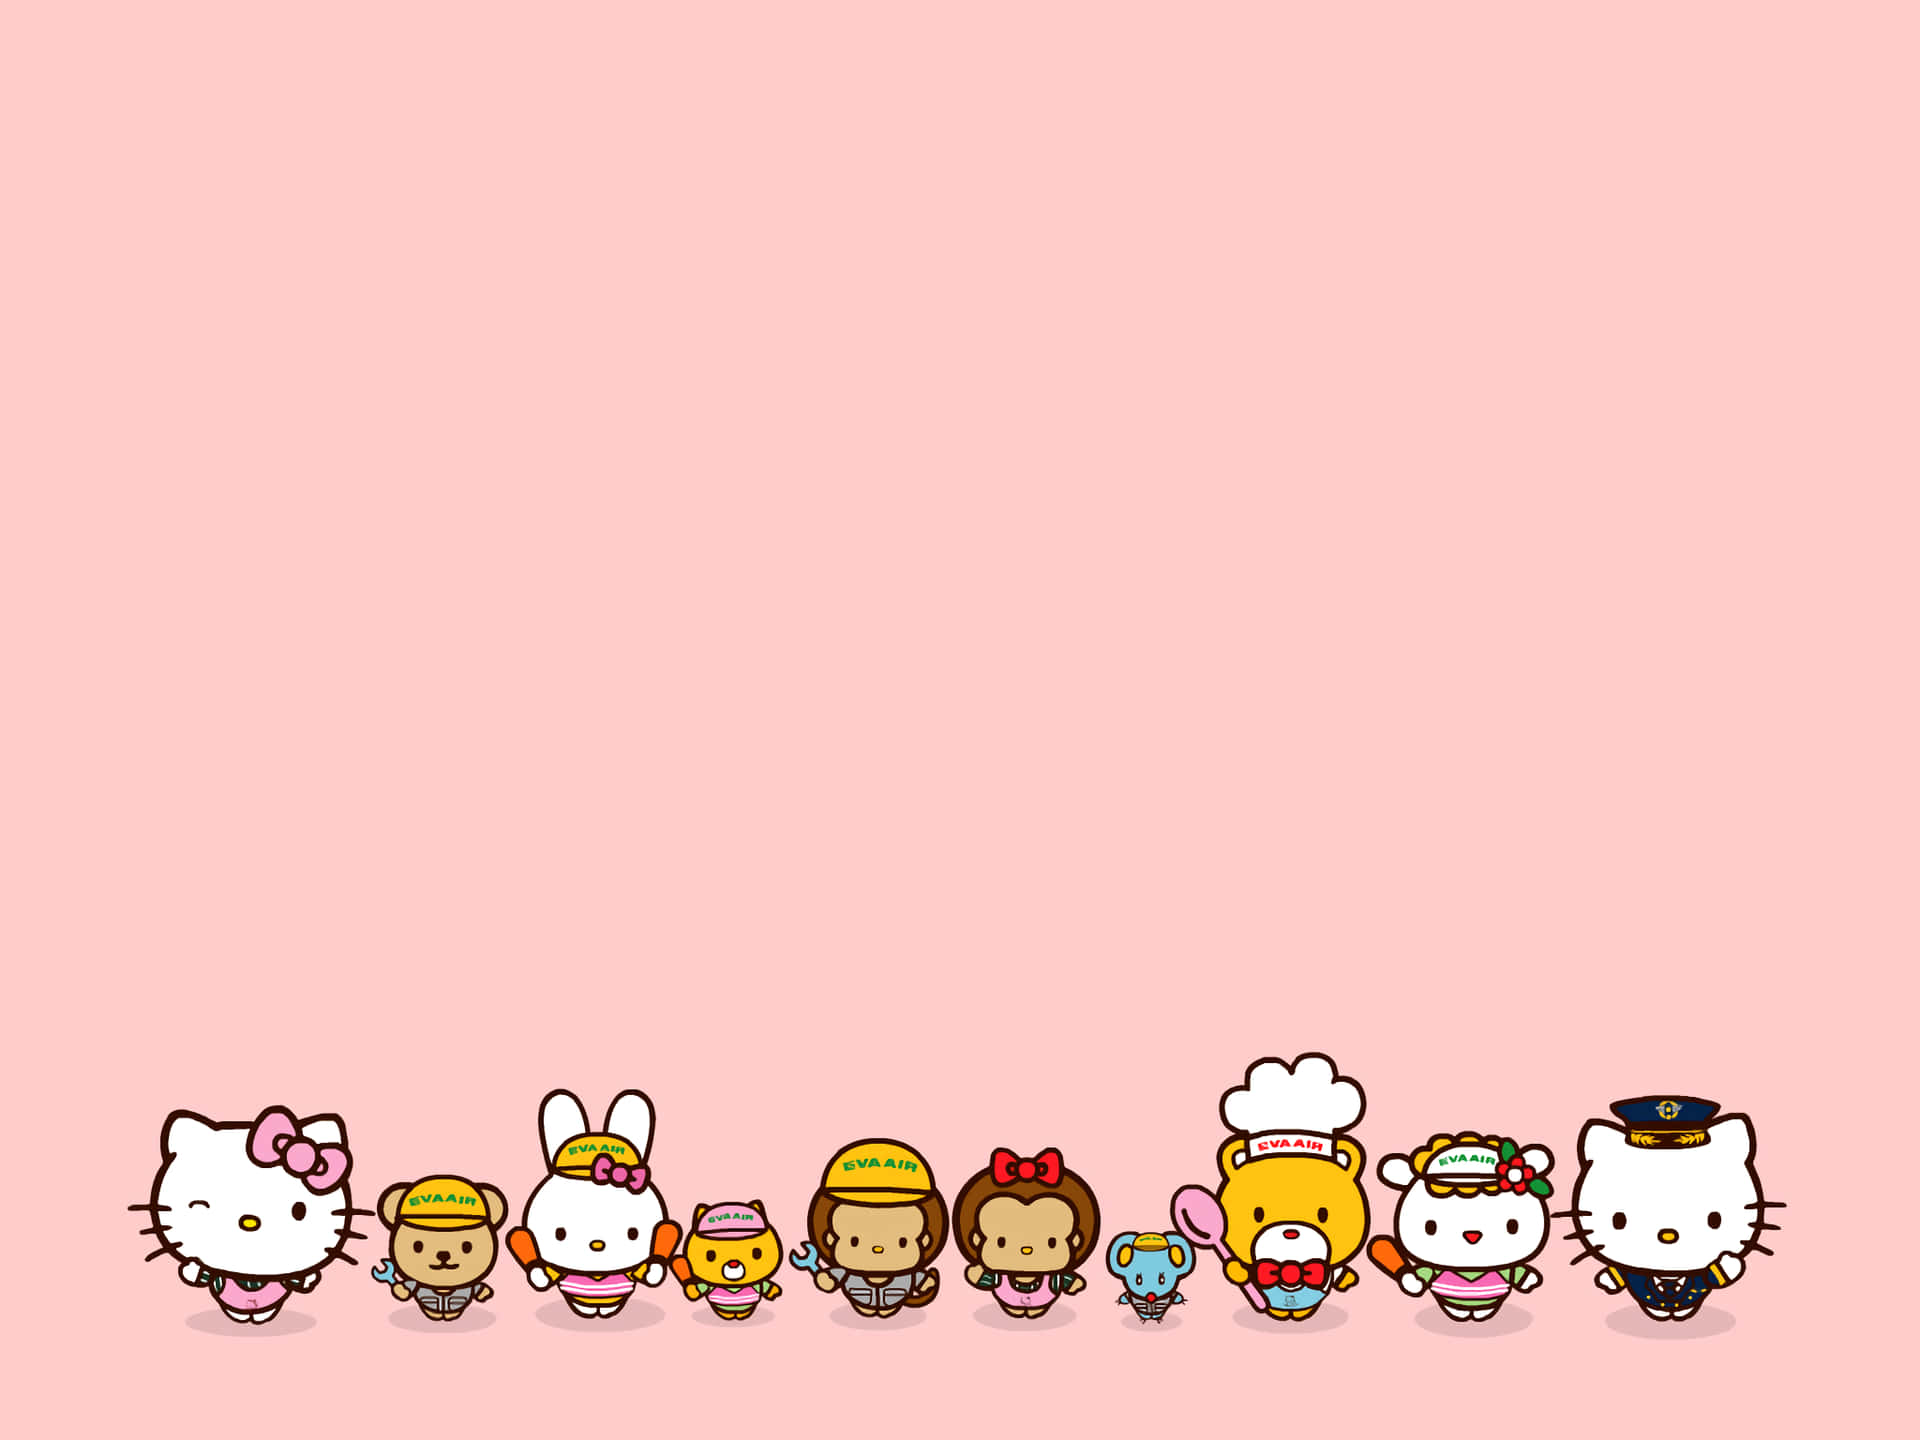 100+] Hello Kitty Aesthetic Background s 